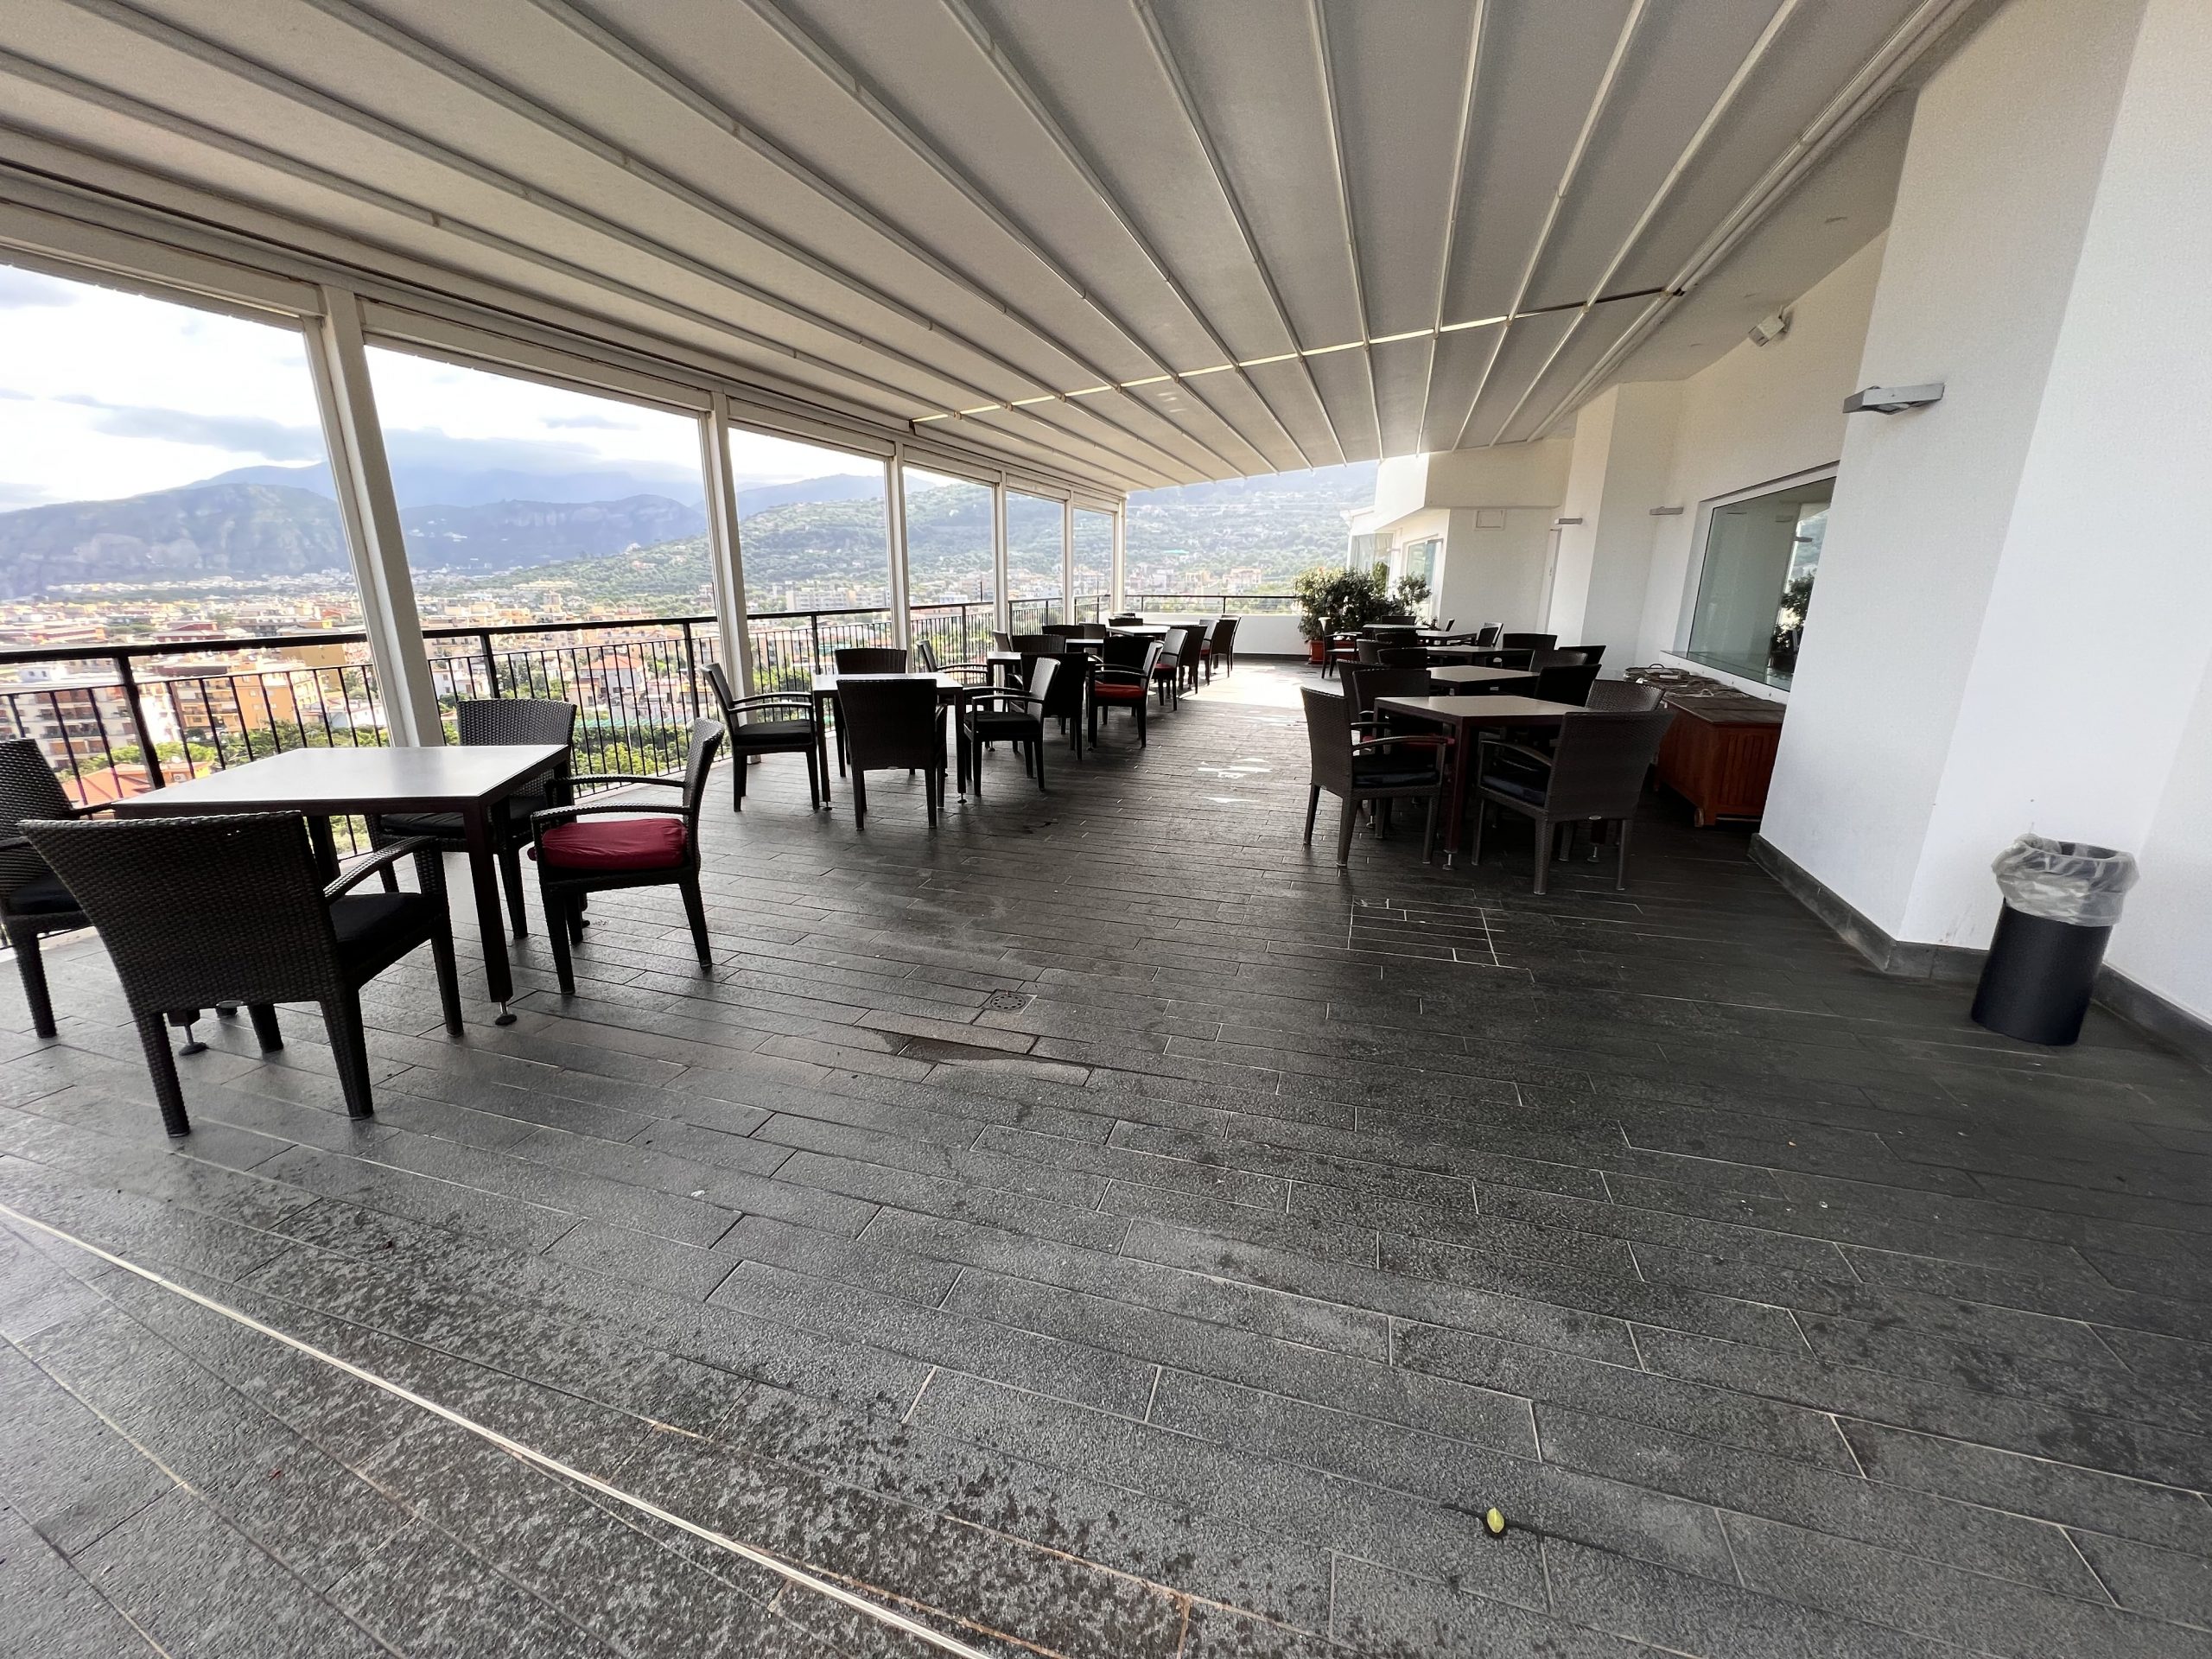 Hilton Sorrento Palace - Settimo Club Lounge 2